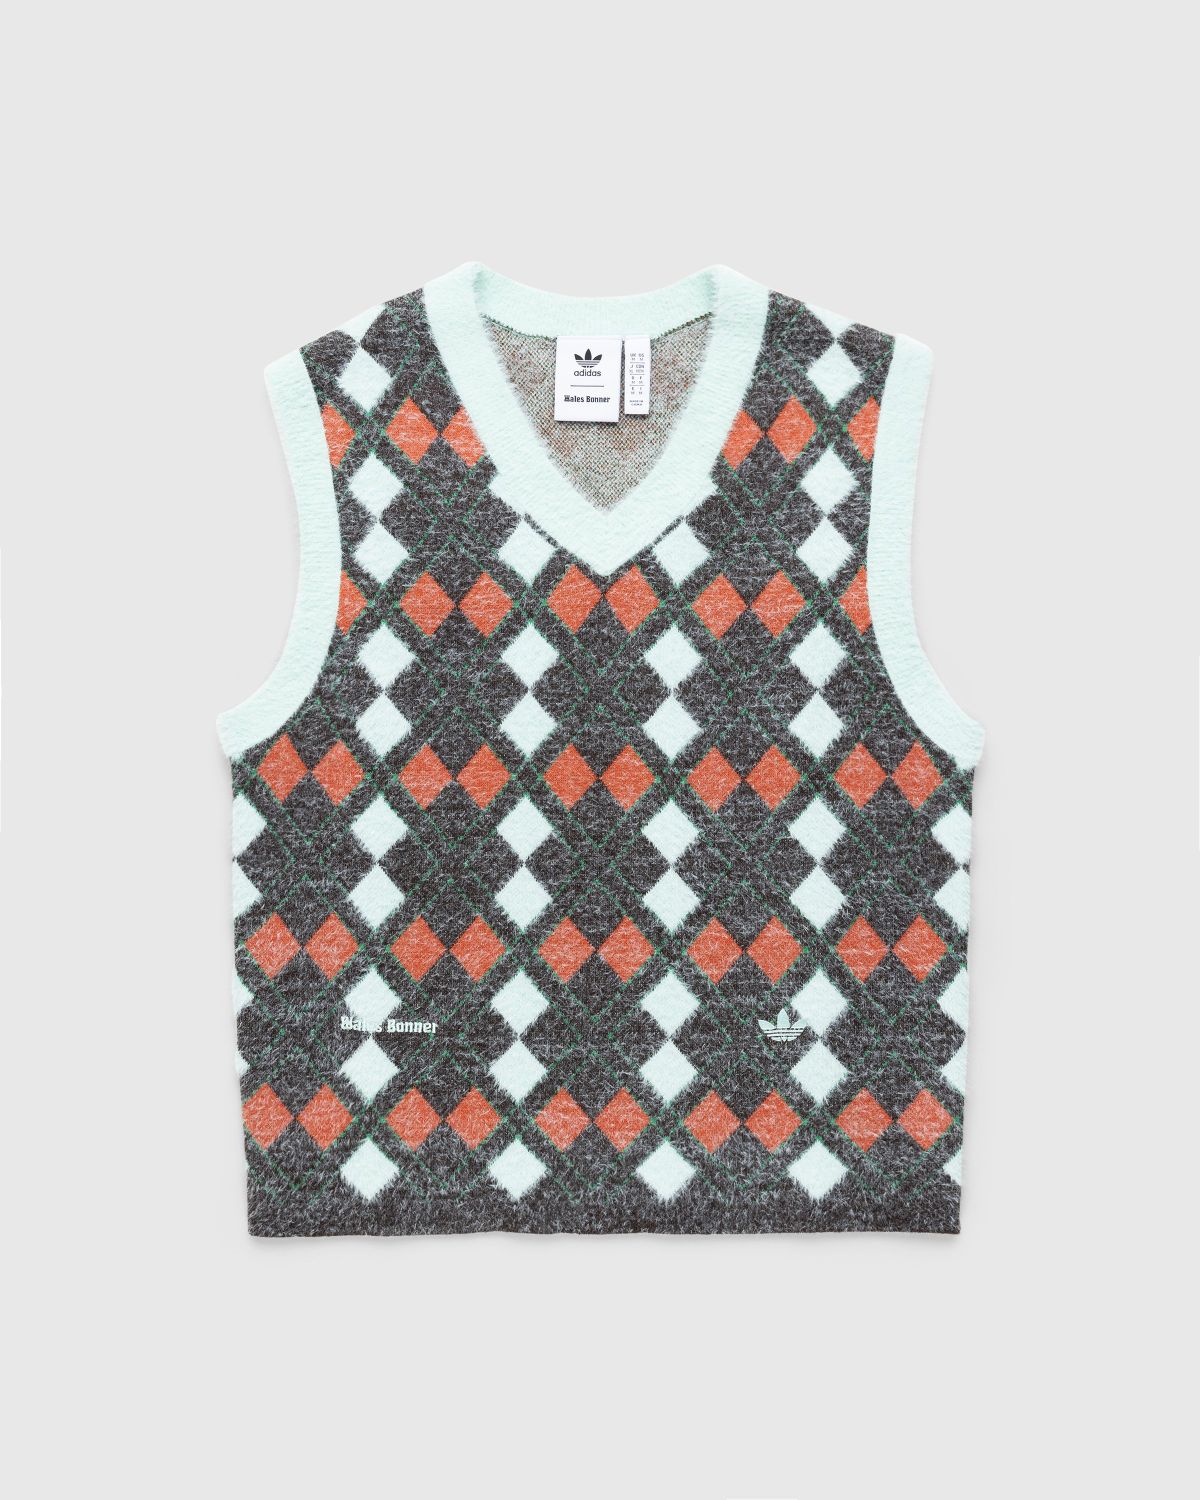 Adidas x Wales Bonner – Knit Argyle Vest Multi - Knitwear - Multi - Image 1